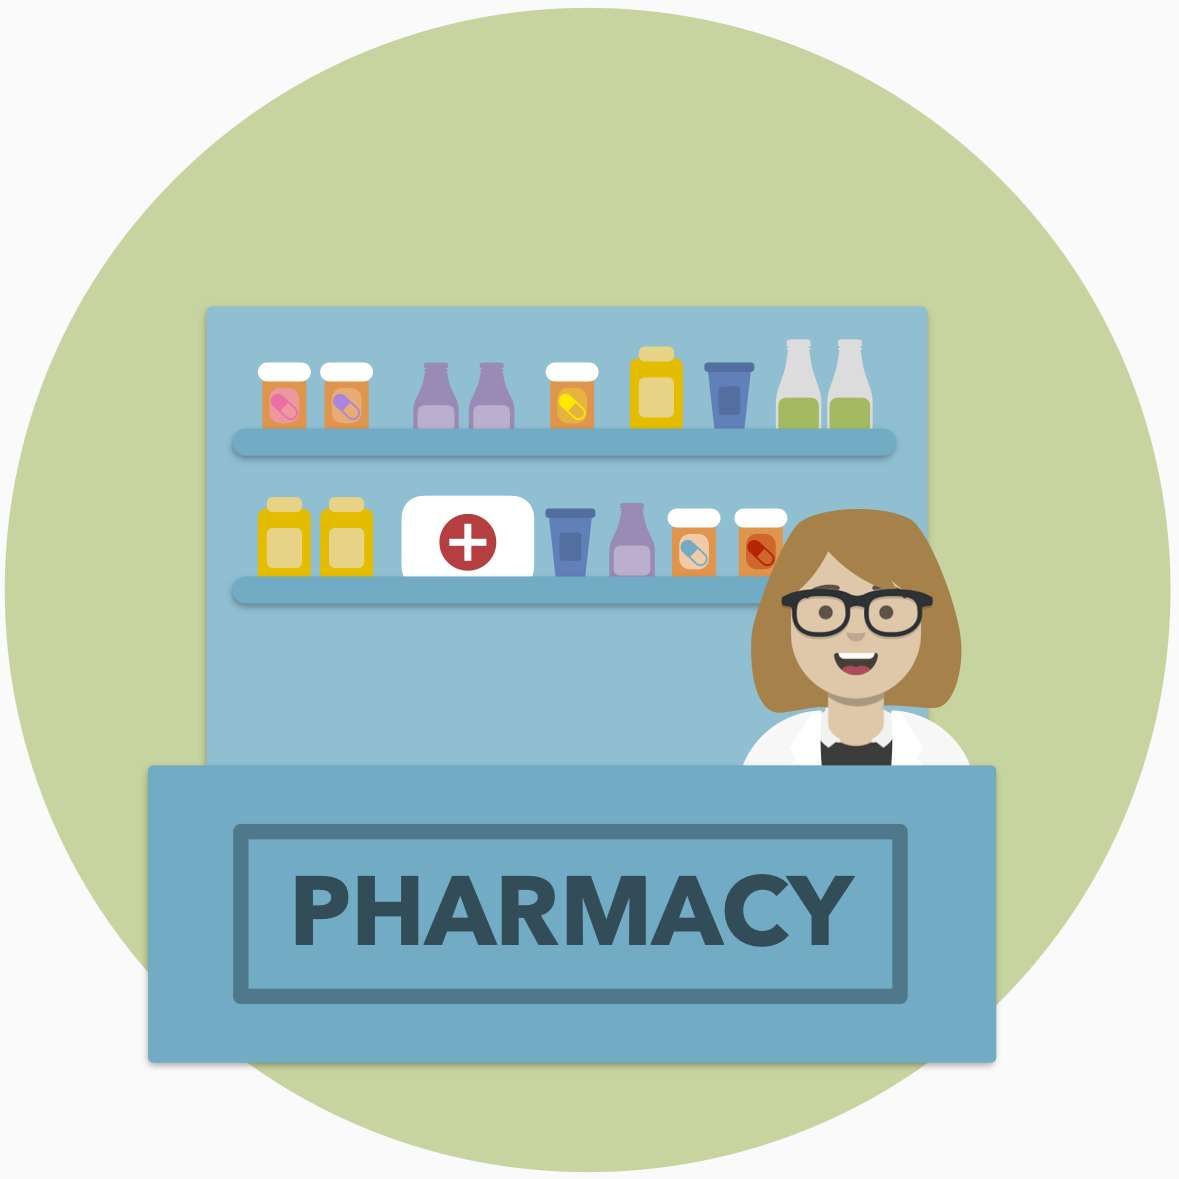 A pharmacist at a pharmacy